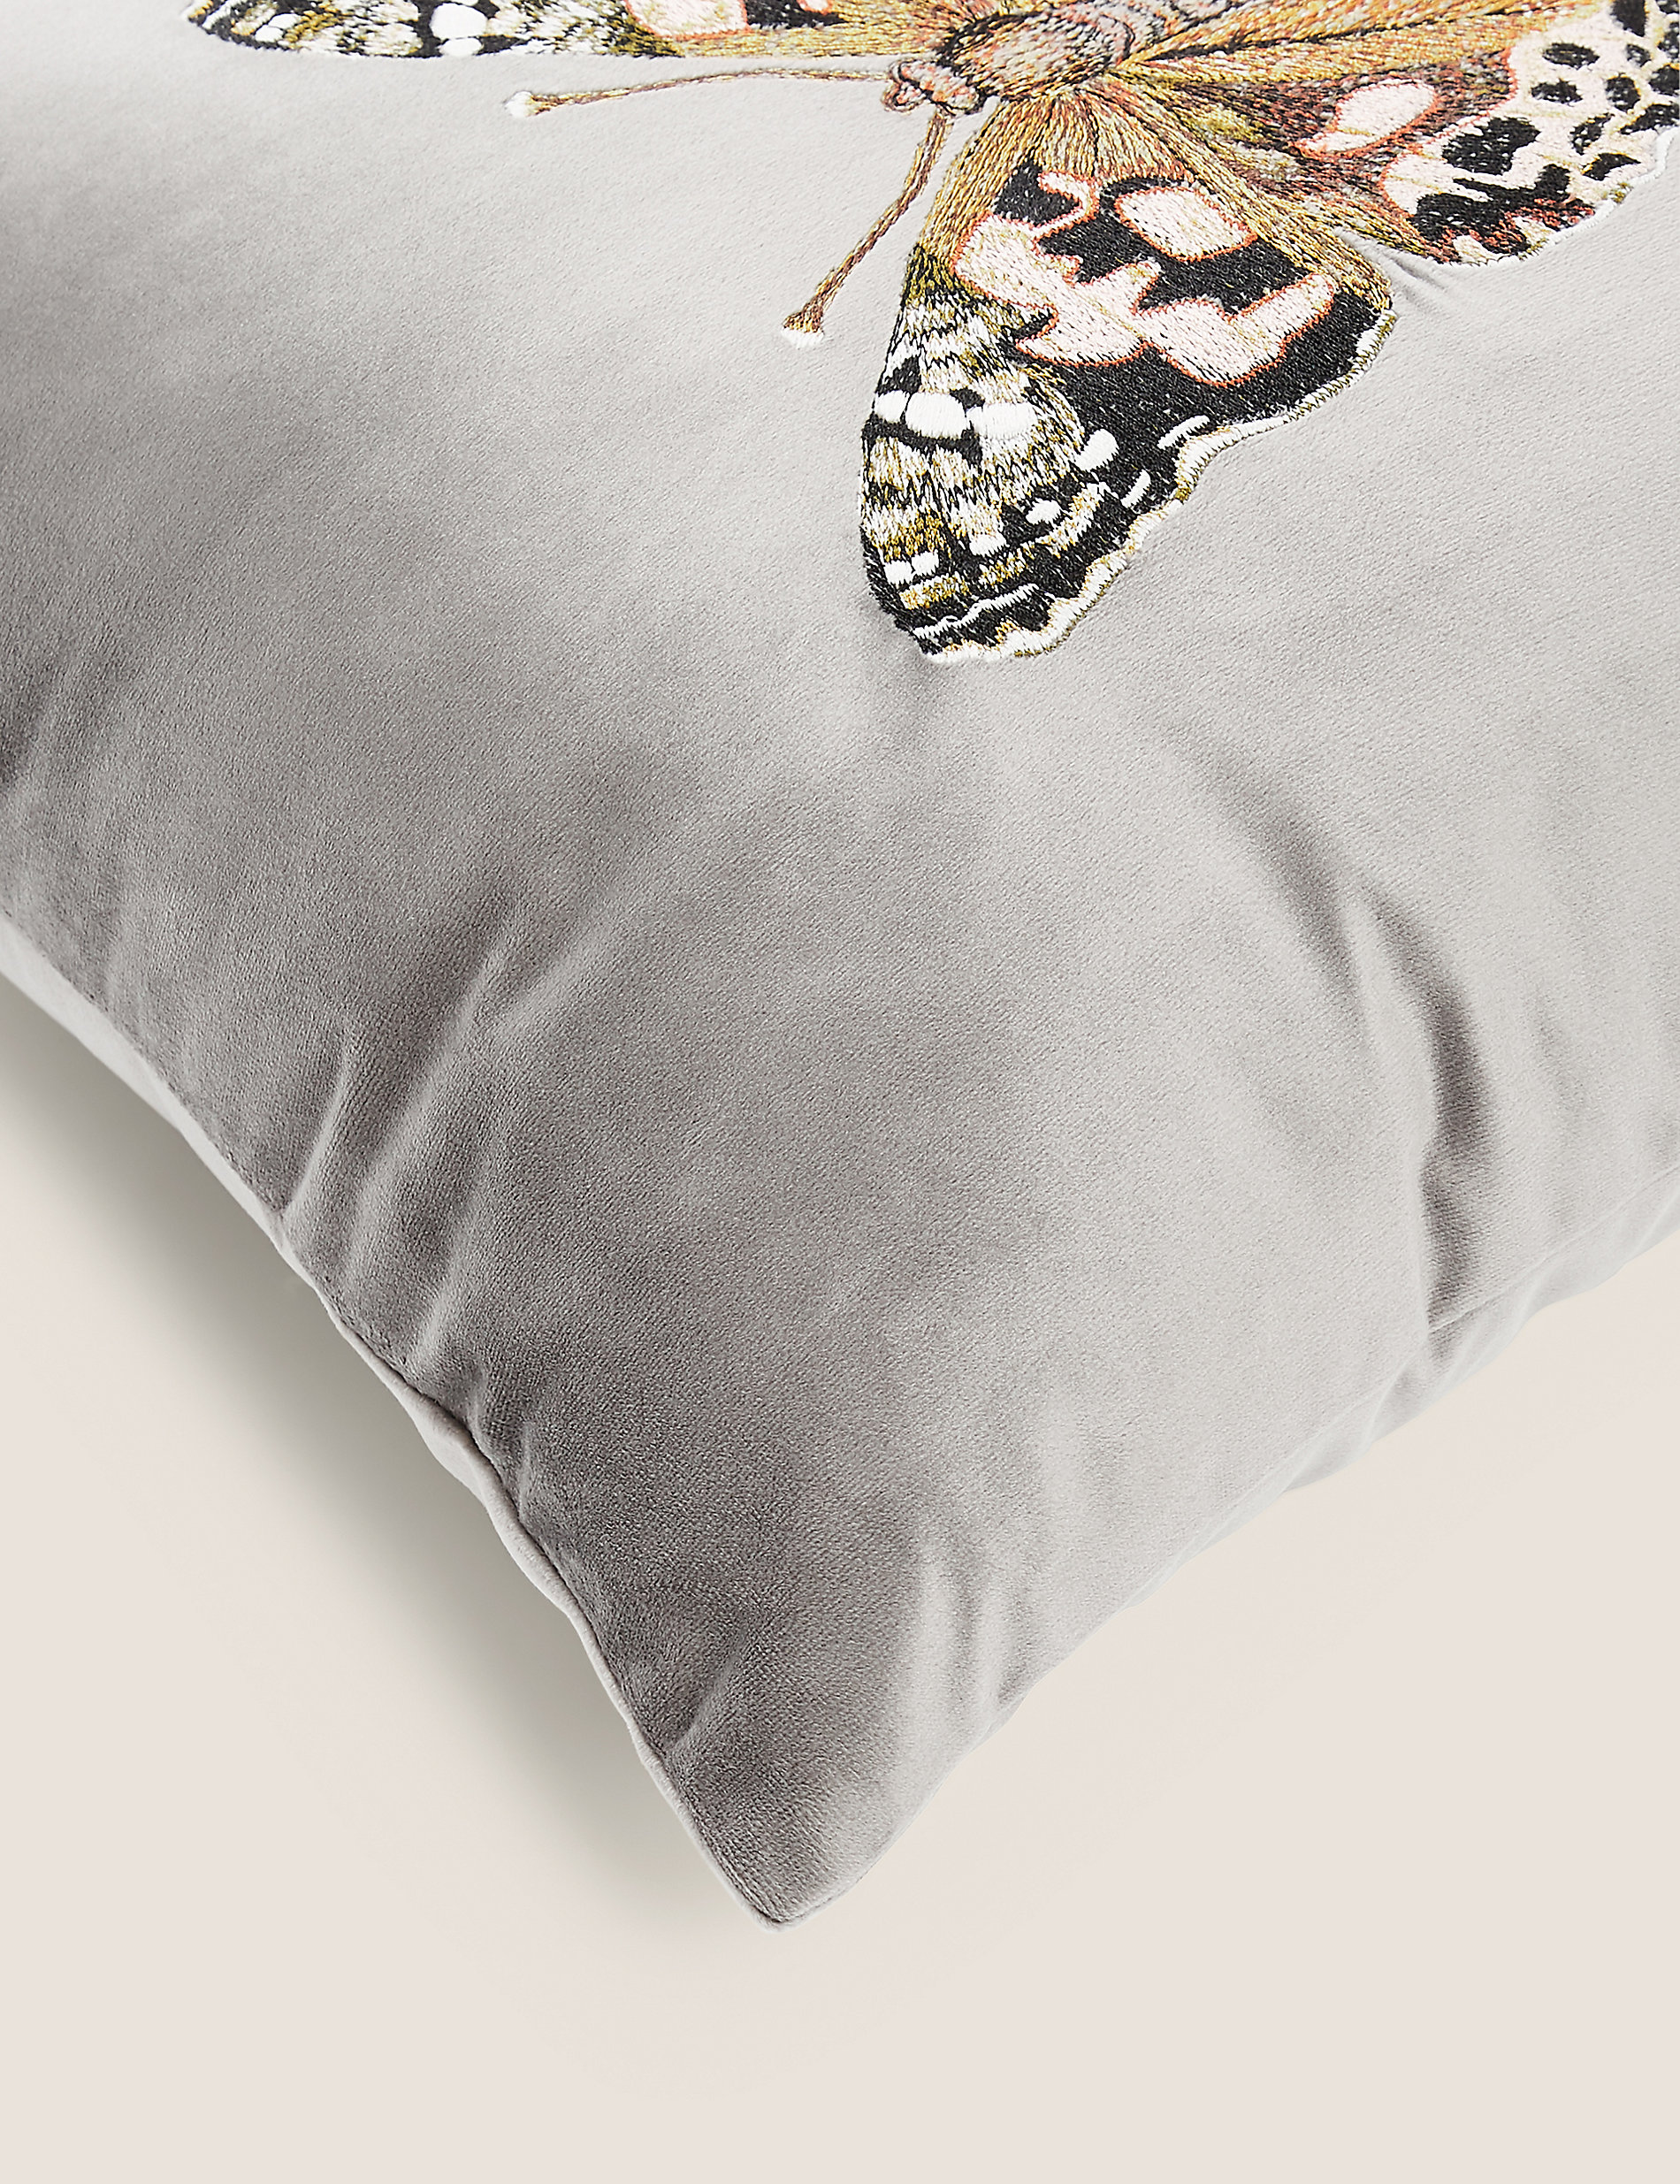 Velvet Butterfly Embroidered Cushion